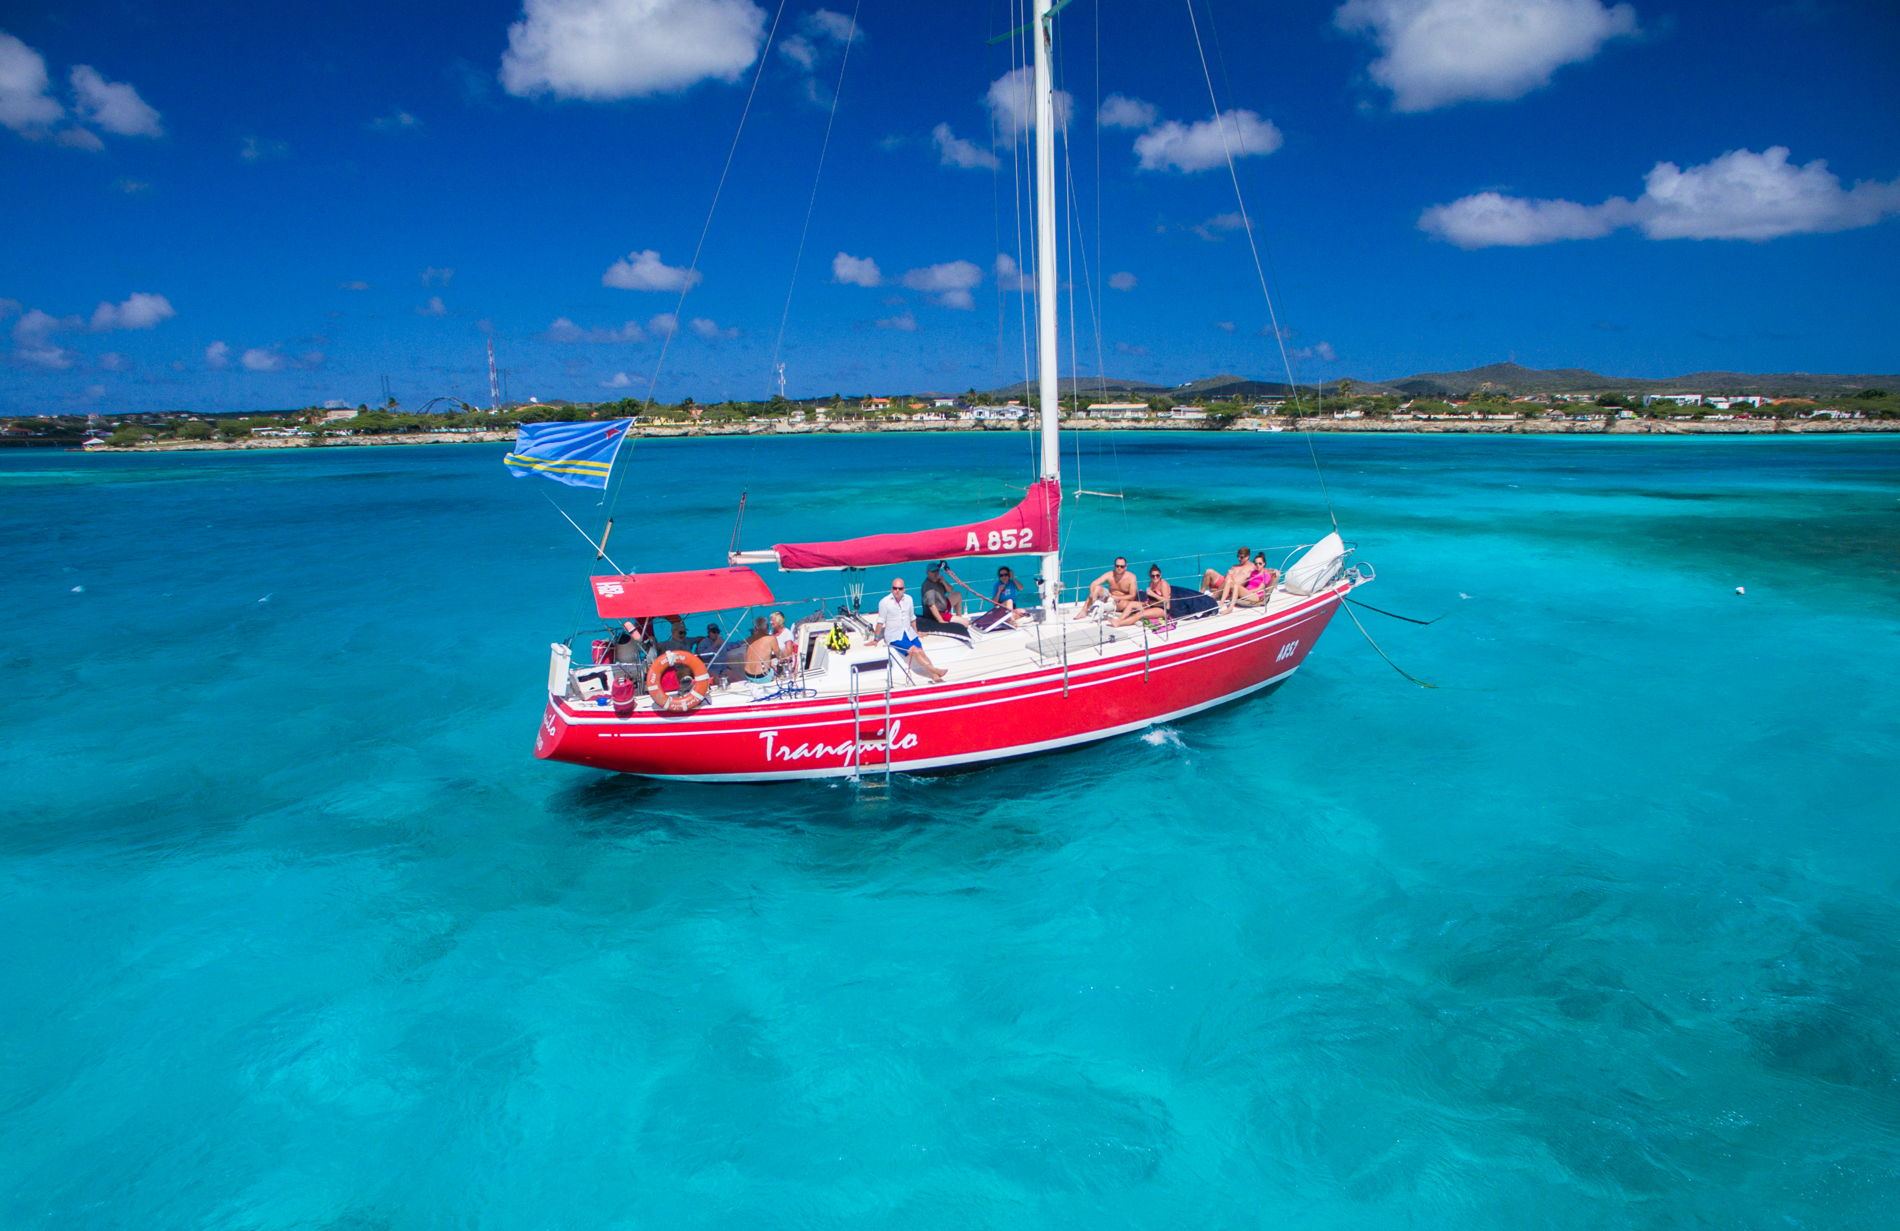 aruba - the tranquilo - sailing charters - visitaruba.com